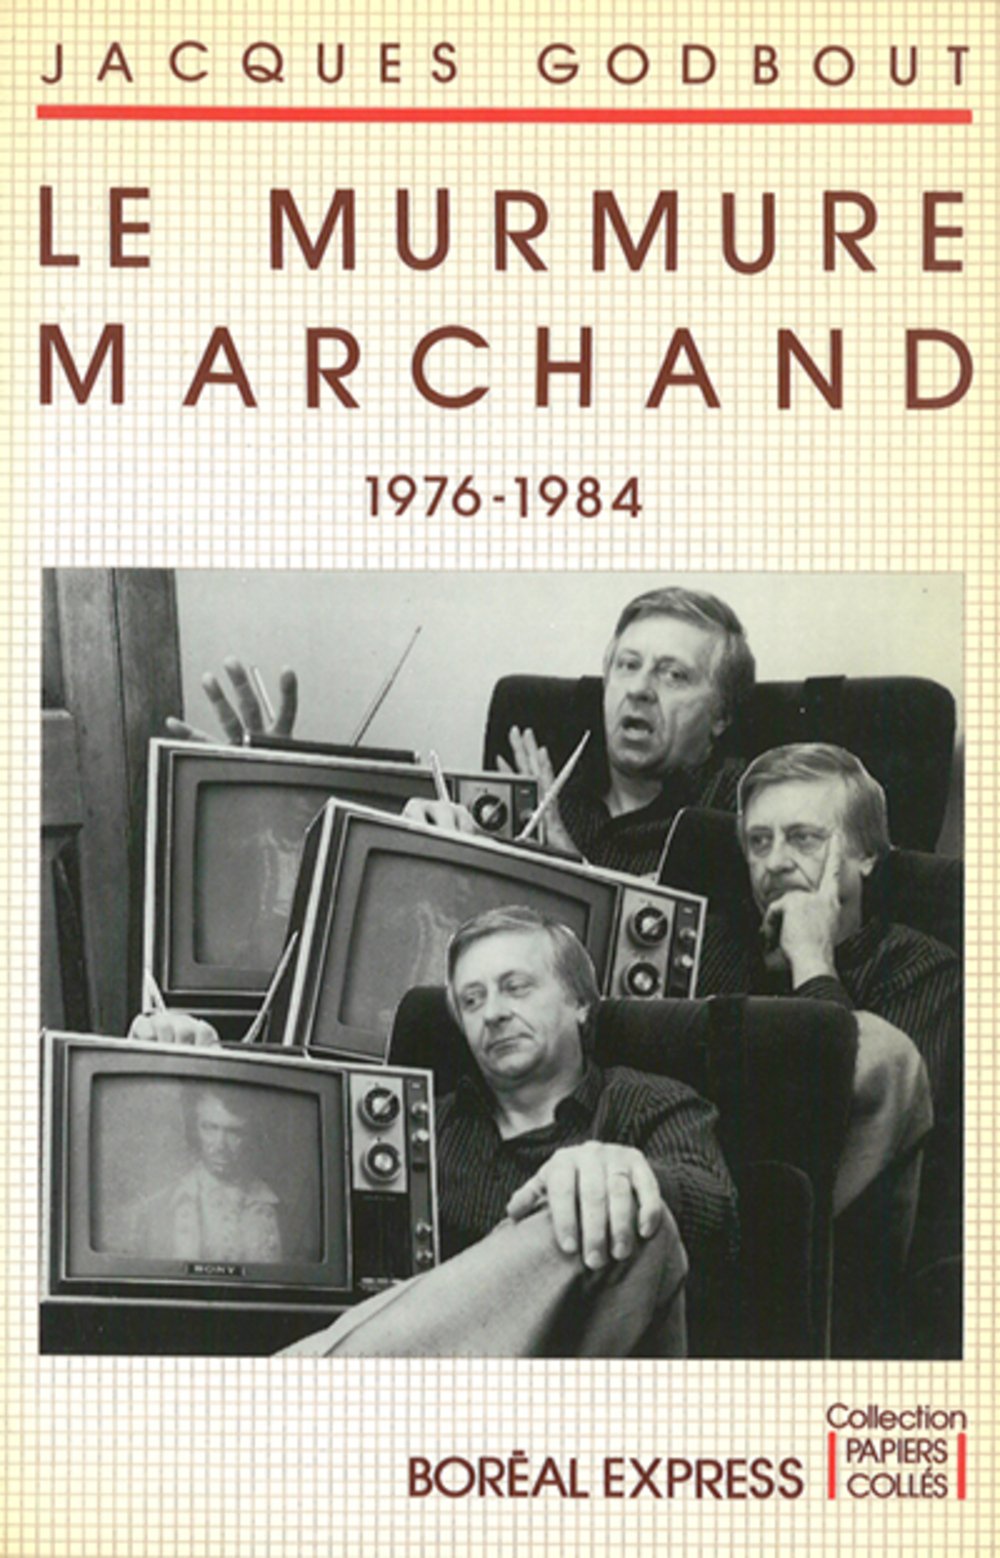 Livre ISBN 2890521028 Le murmure marchand (1976-1984) (Jacques Godbout)